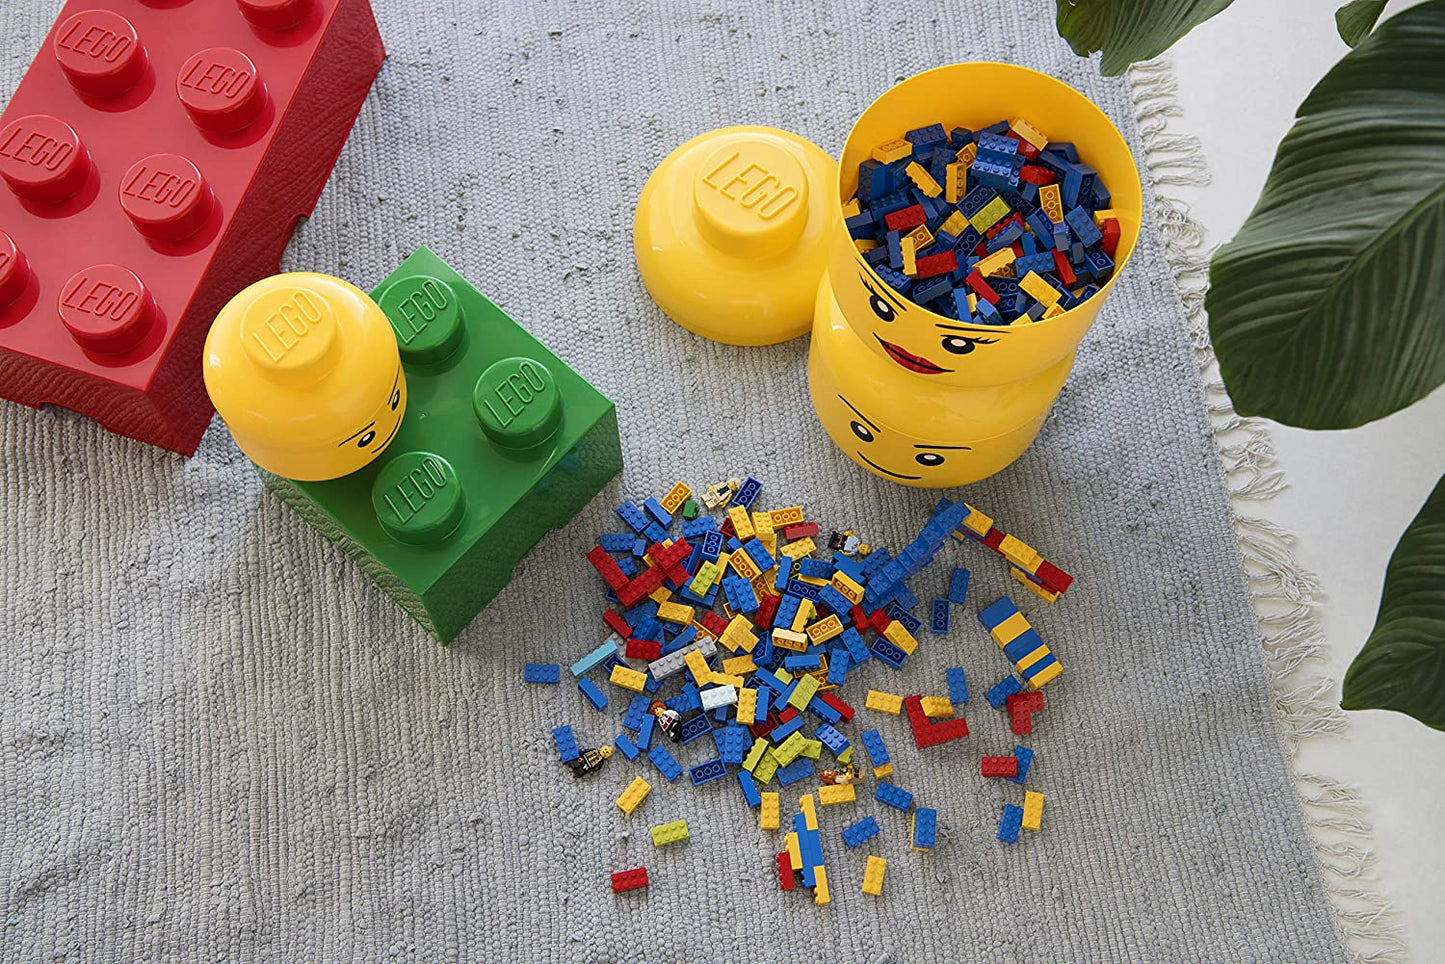 Room Copenhagen Lego, Storage Head Small Boy or Girl